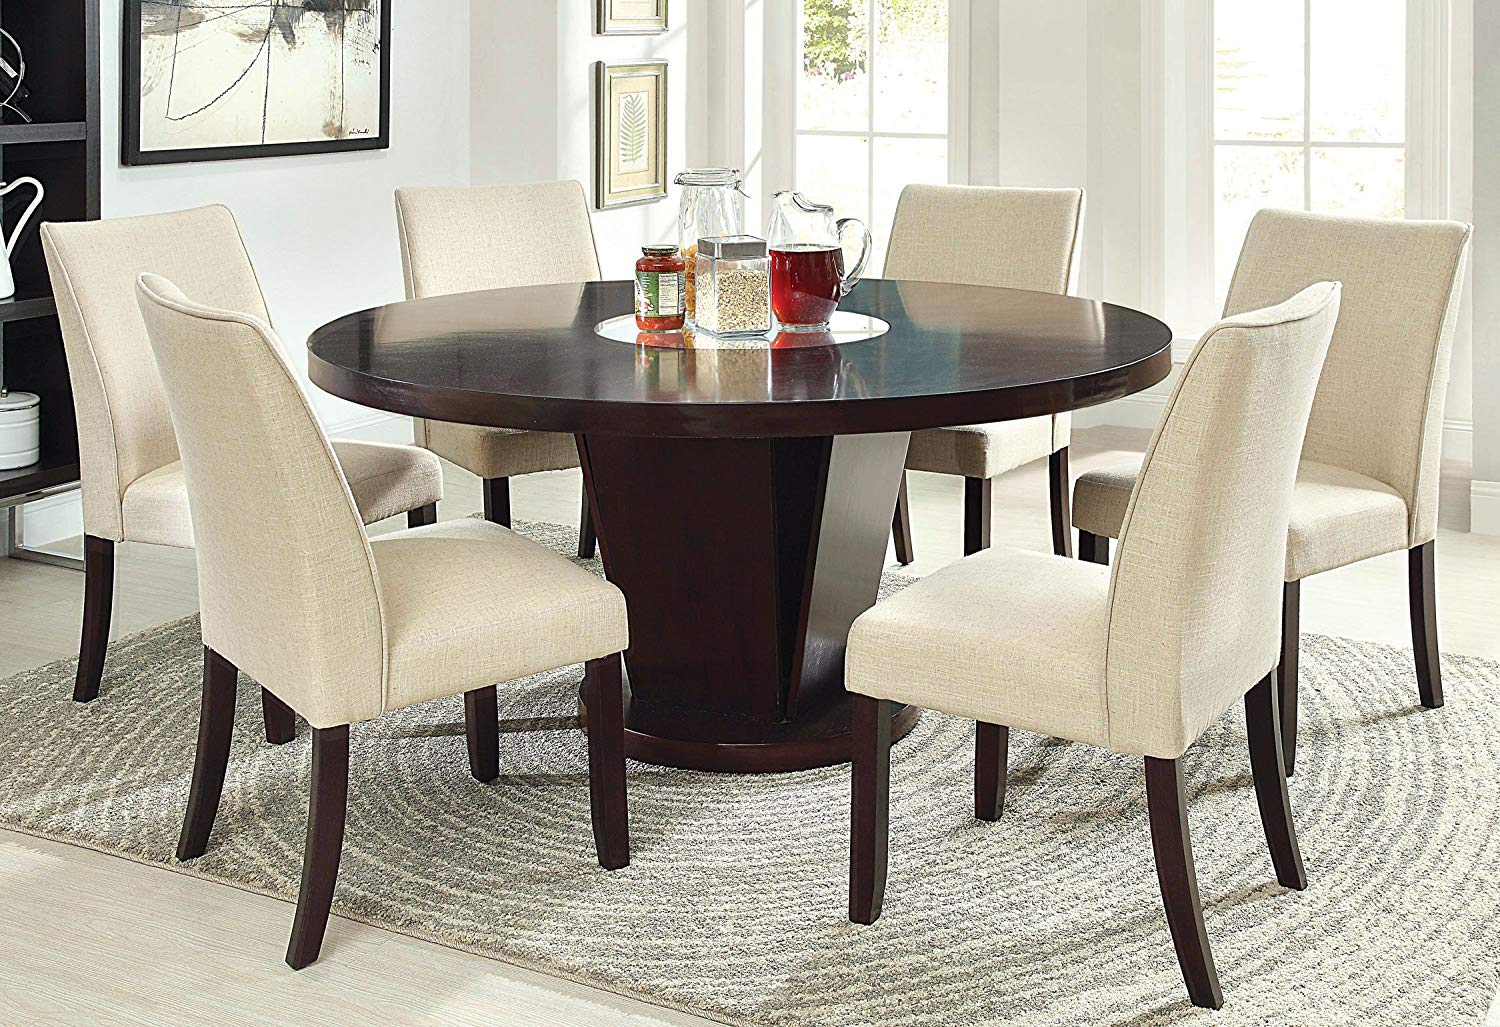 Светлые кухонные столы. Стол журнальный Brookfield t496-8. Round Dining Table a482. Столовая группа Walnut Dining Table w/6 Chairs. Круглый стол в интерьере.